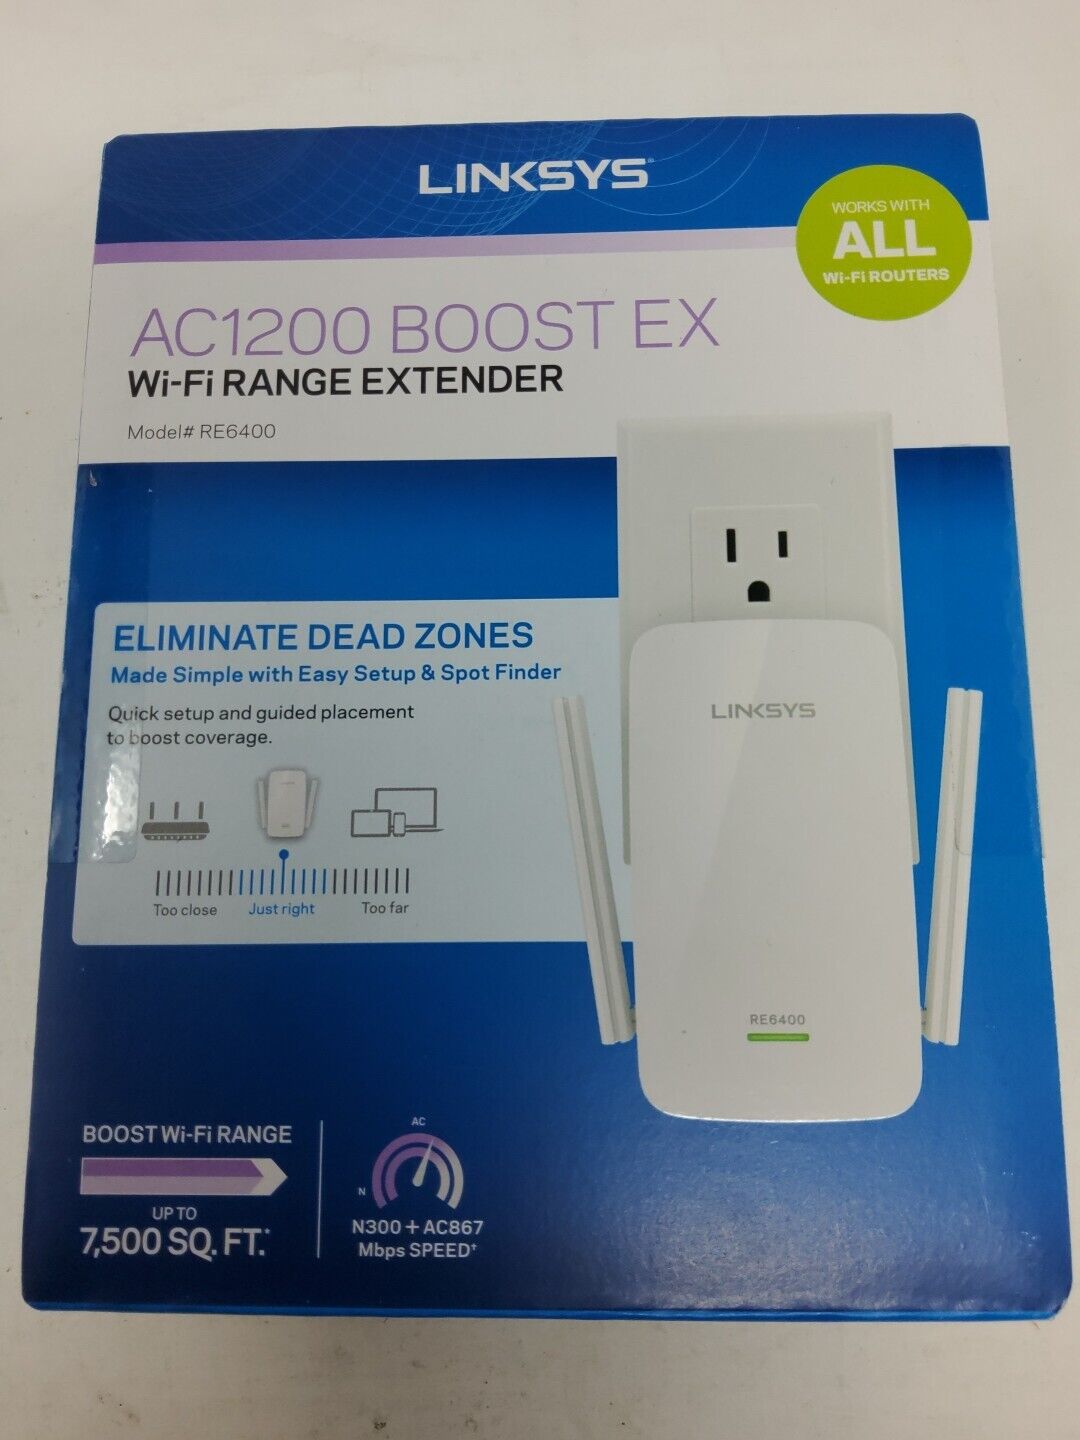 Linksys AC1200 BOOST EX WiFi Range Extender